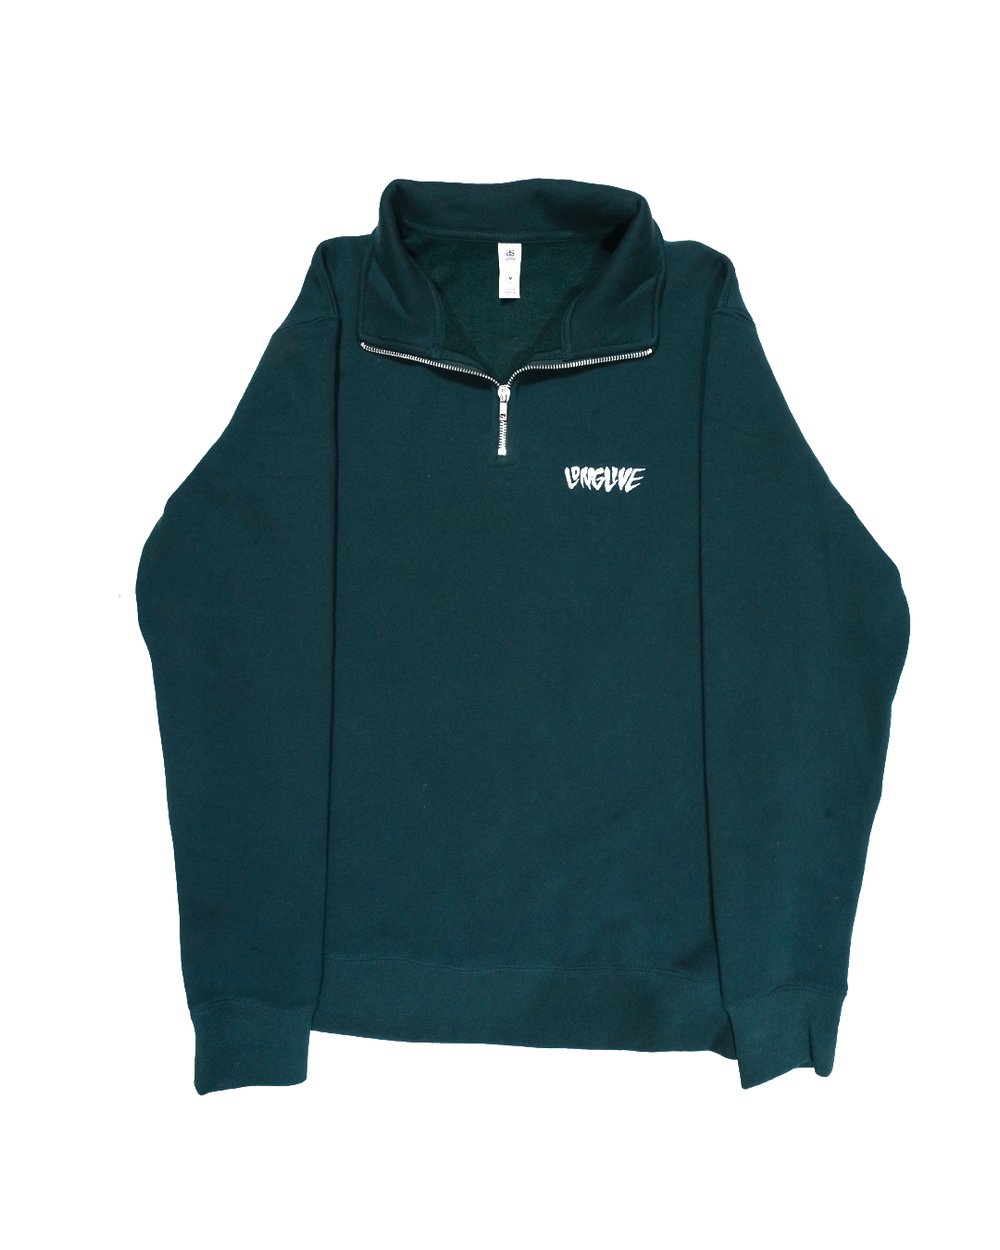 Image of Long Live Tri Force Half Zip Sweatshirt - Pine Green